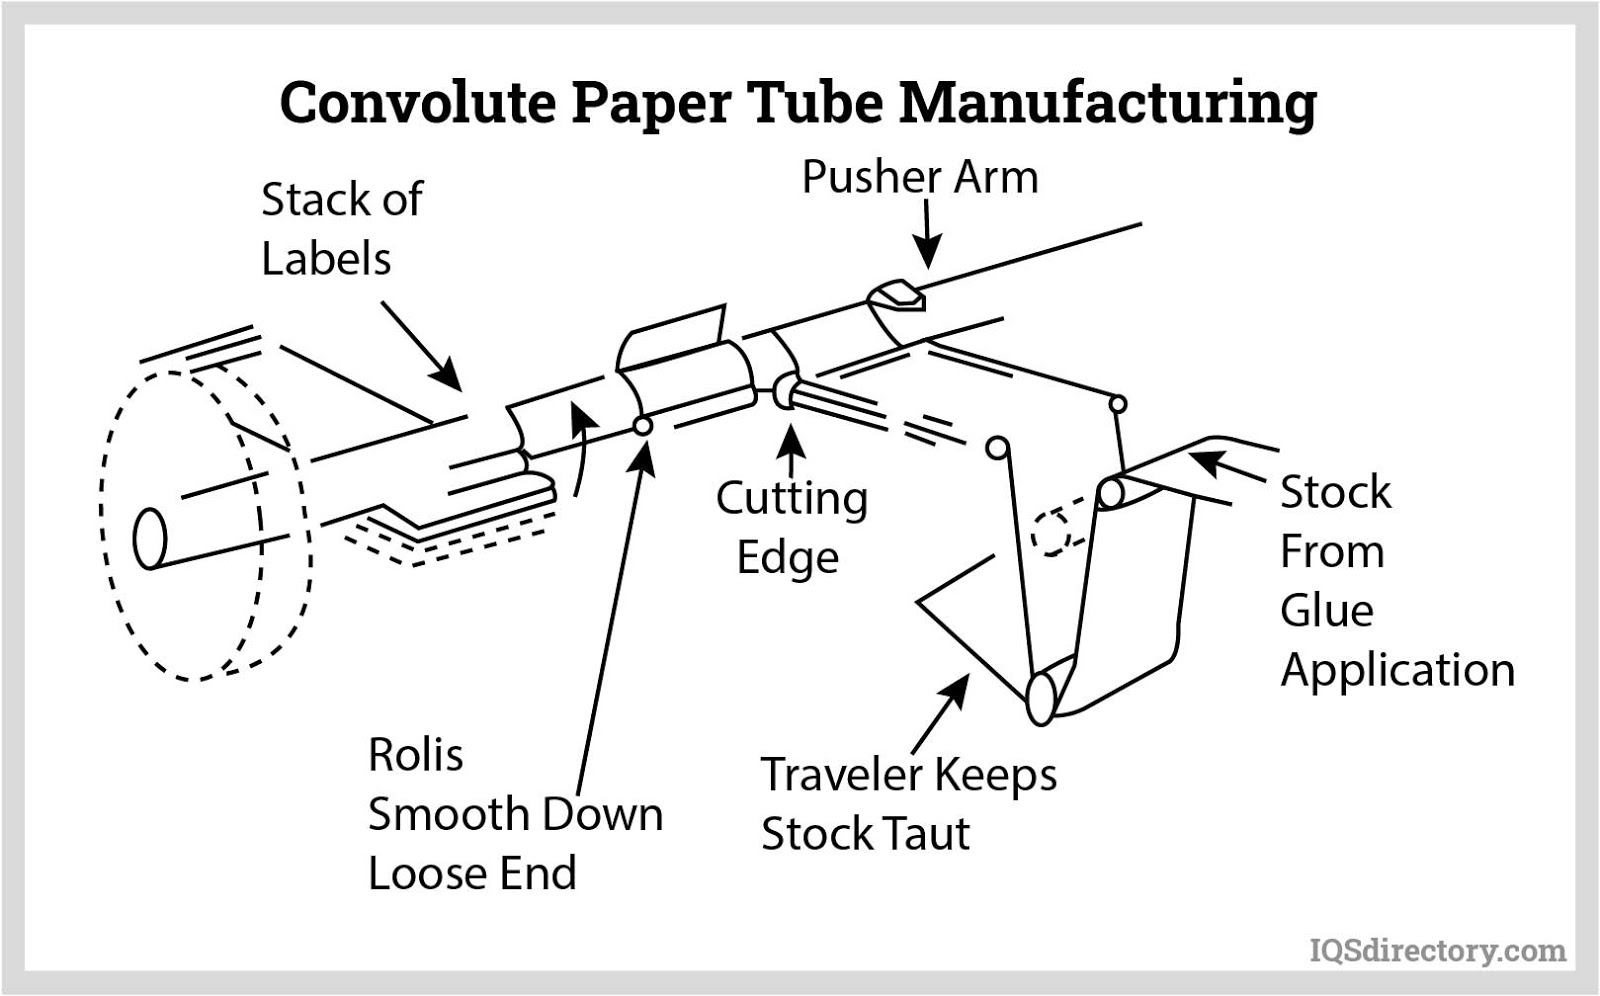 Convolute Paper Tube Manufacturing